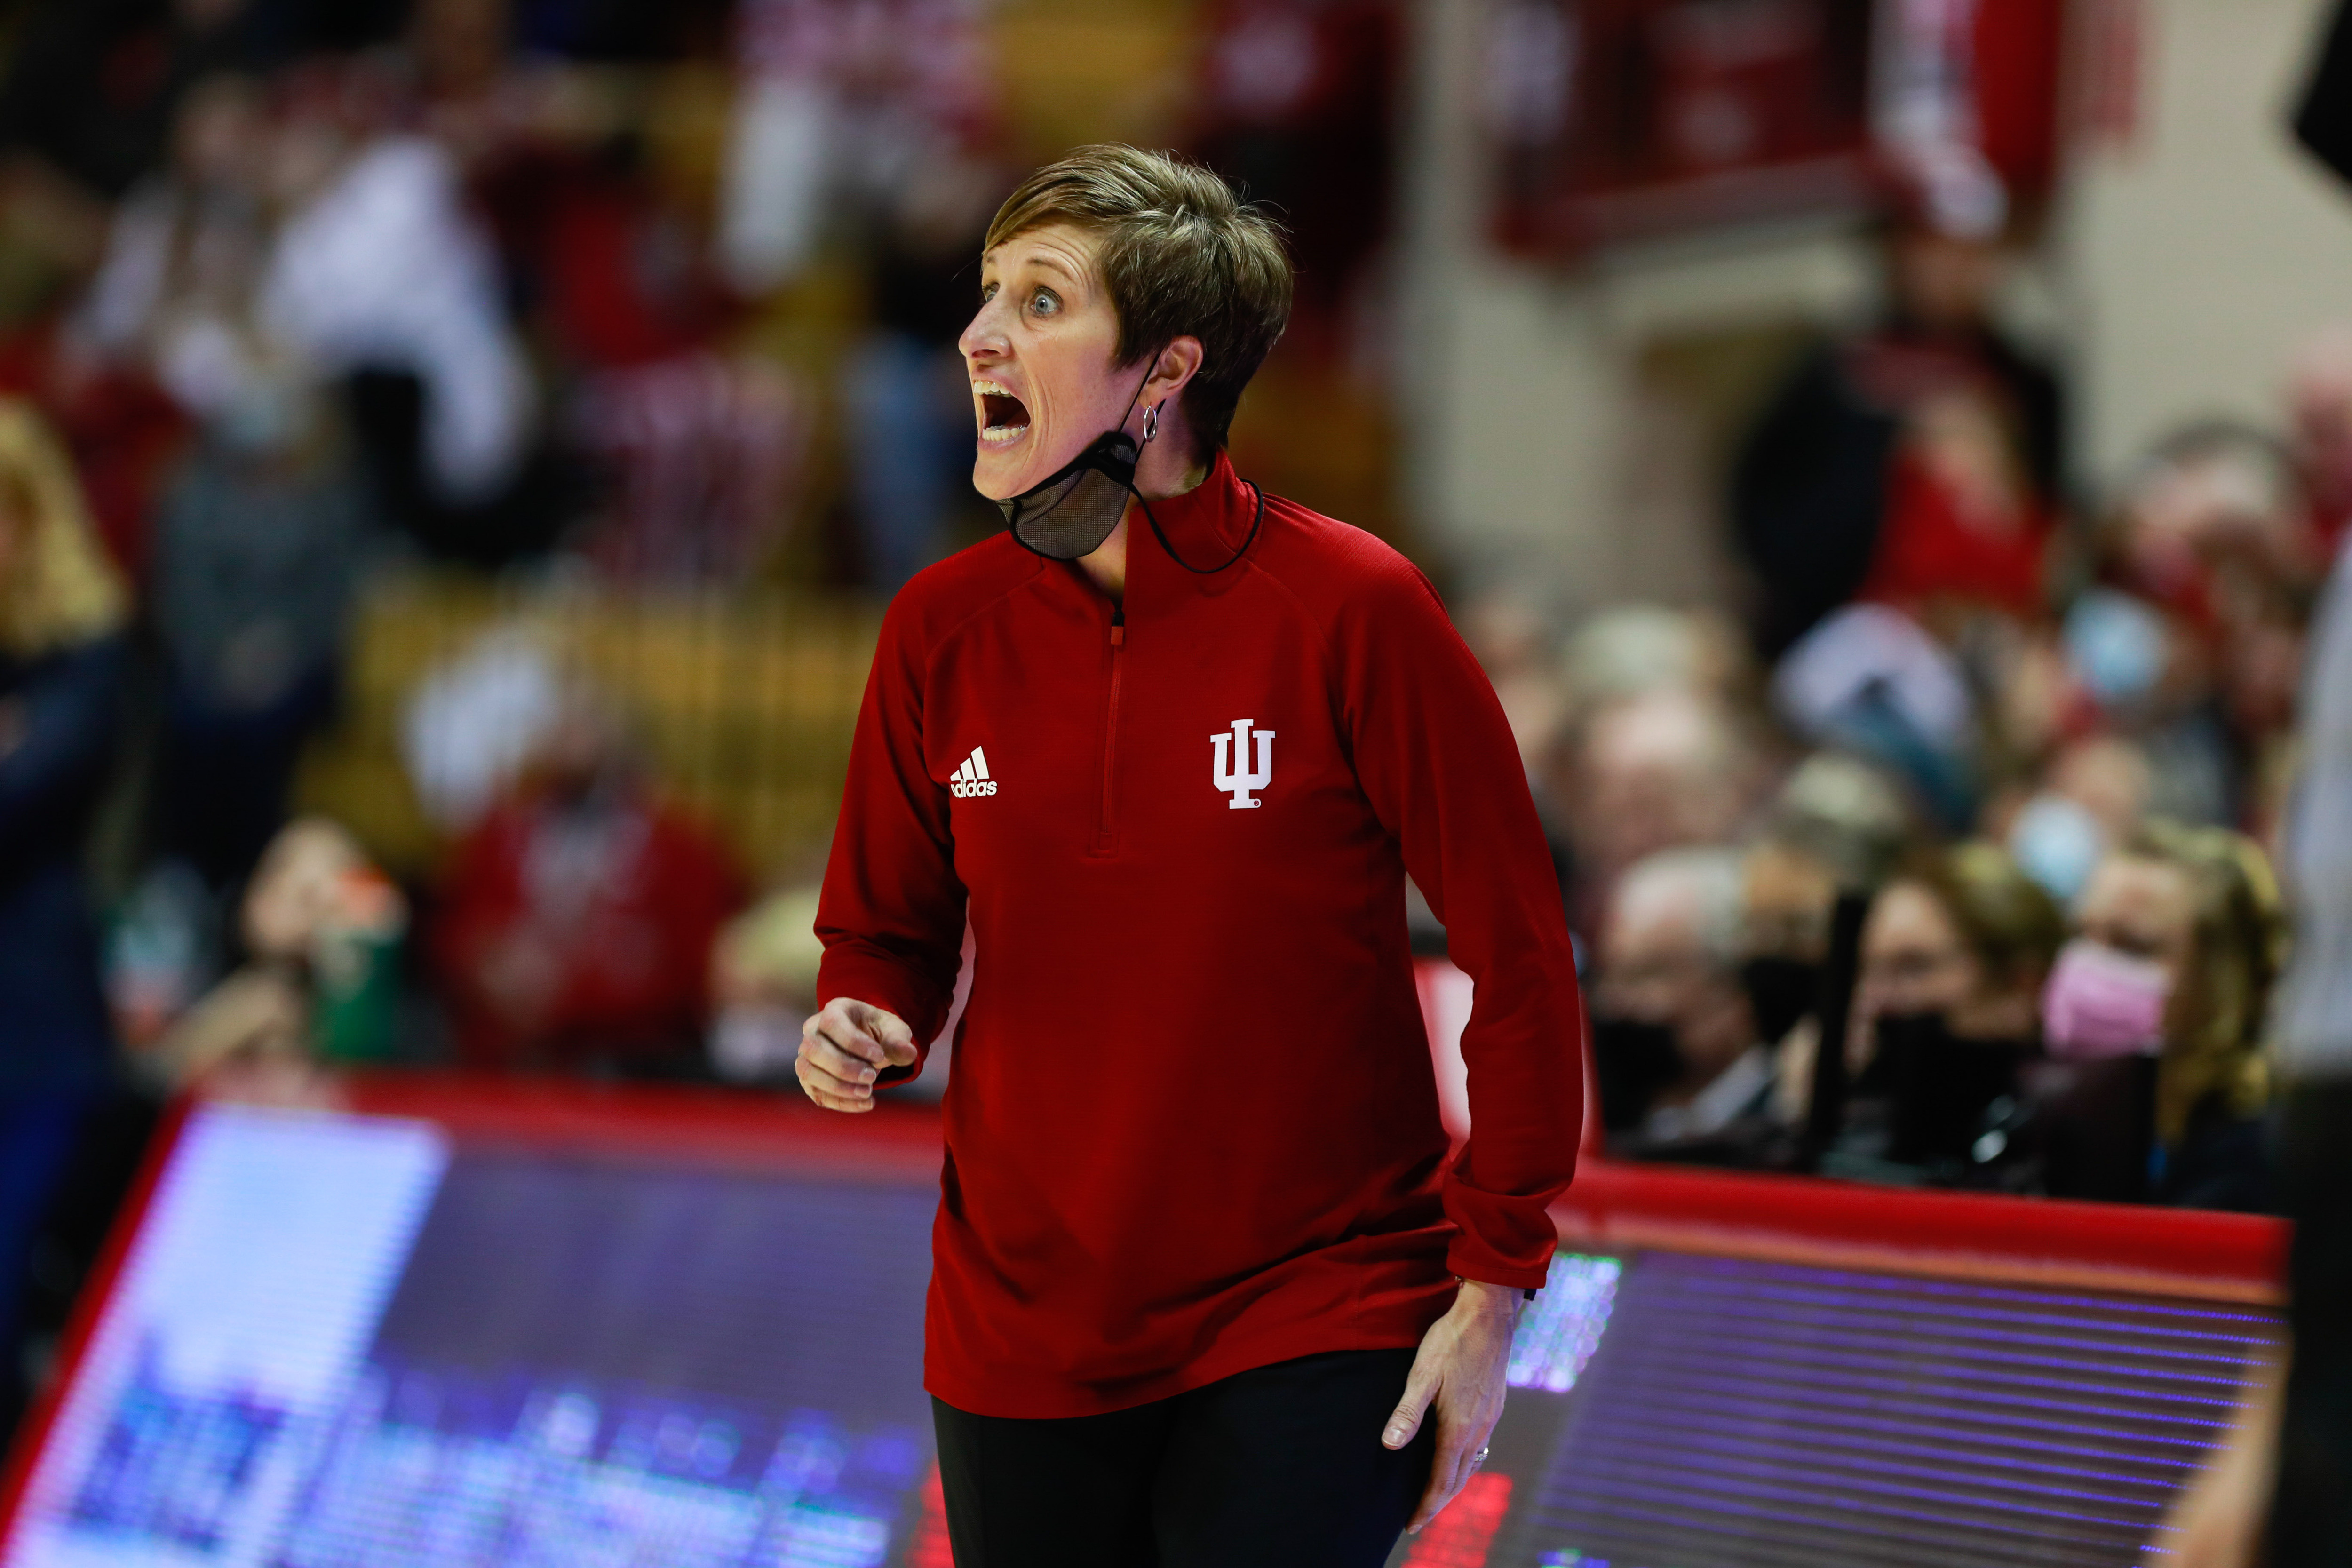 Indiana University women’s basketball coach Teri Moren...